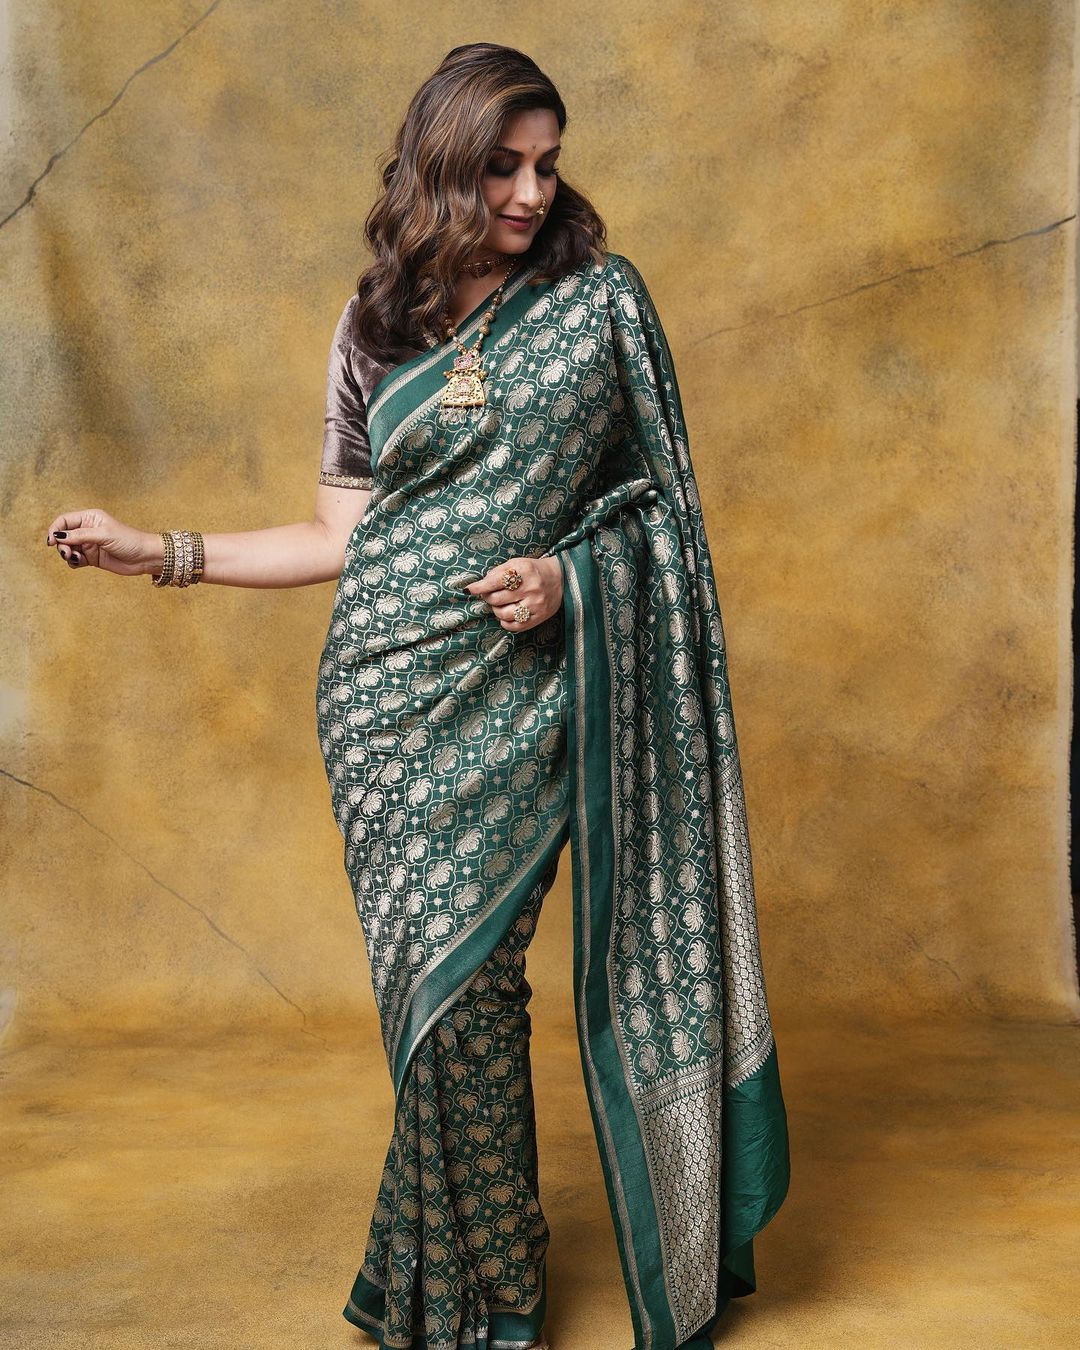 Sonali Bendre's Marathmola Saree Look: Green Banarasi Saree and Velvet Blouse Elegance